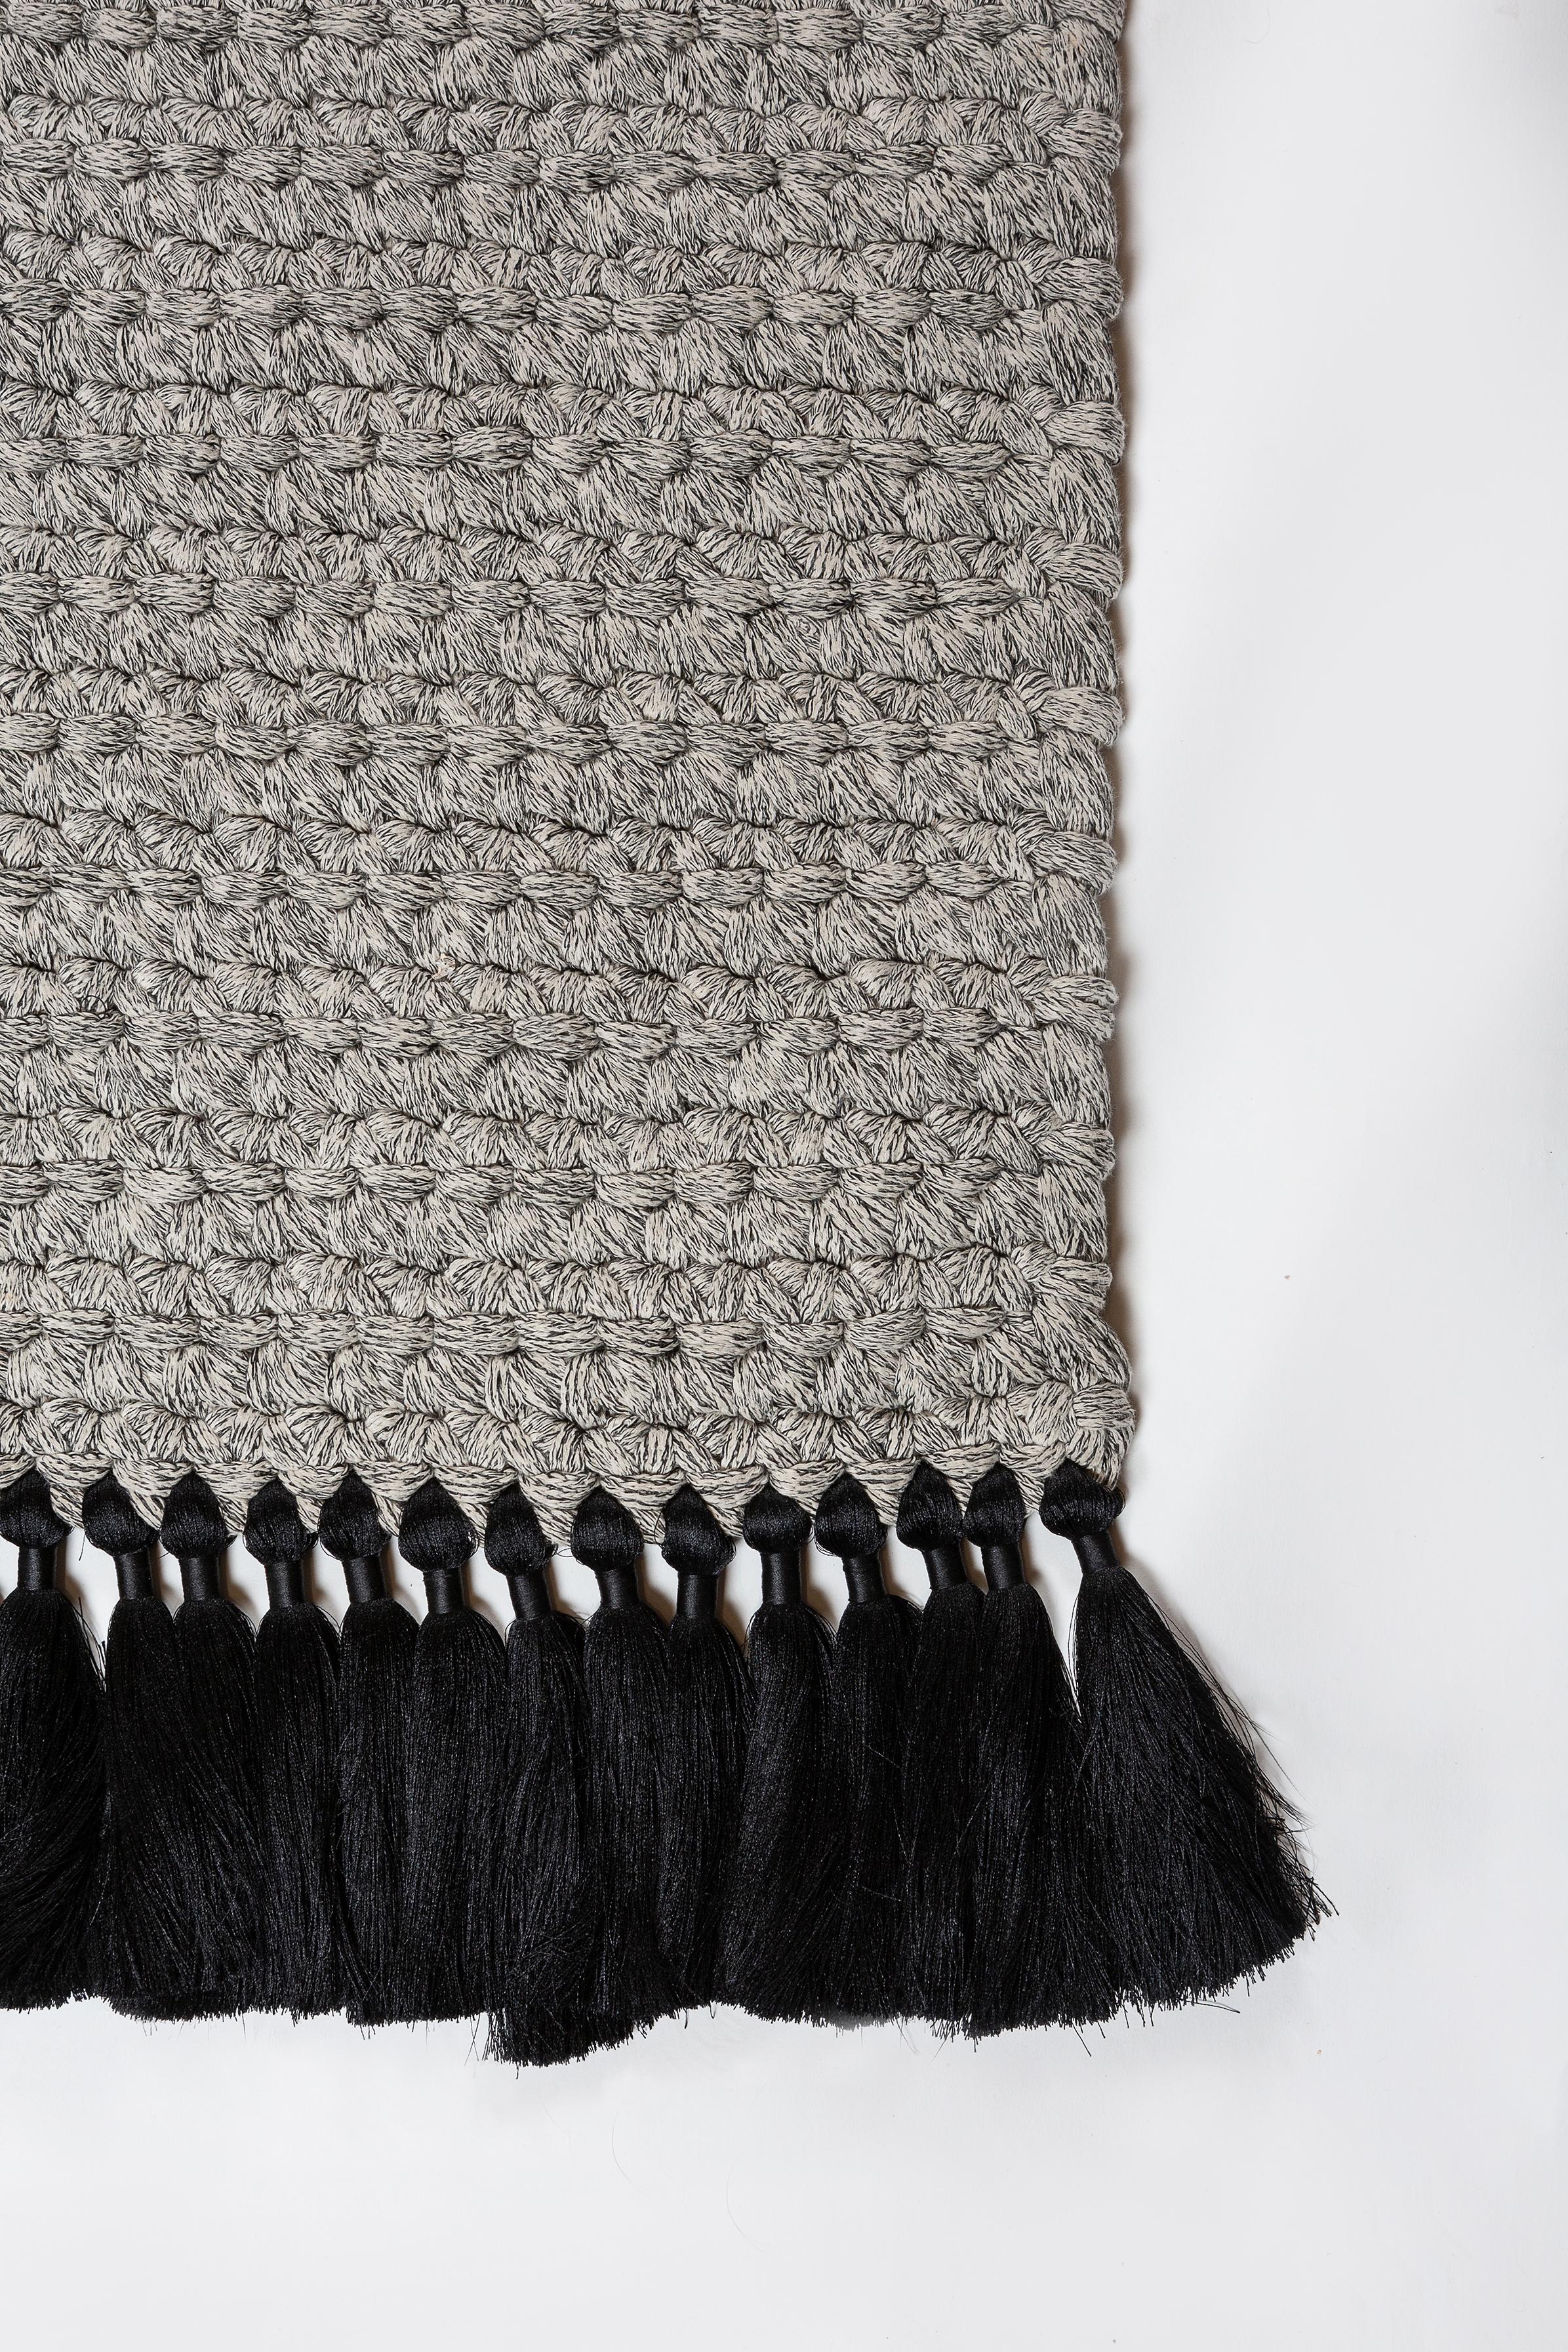 Handmade Crochet Two-Tone Rug in Black Made of iota's Bespoke Yarns For Sale 2